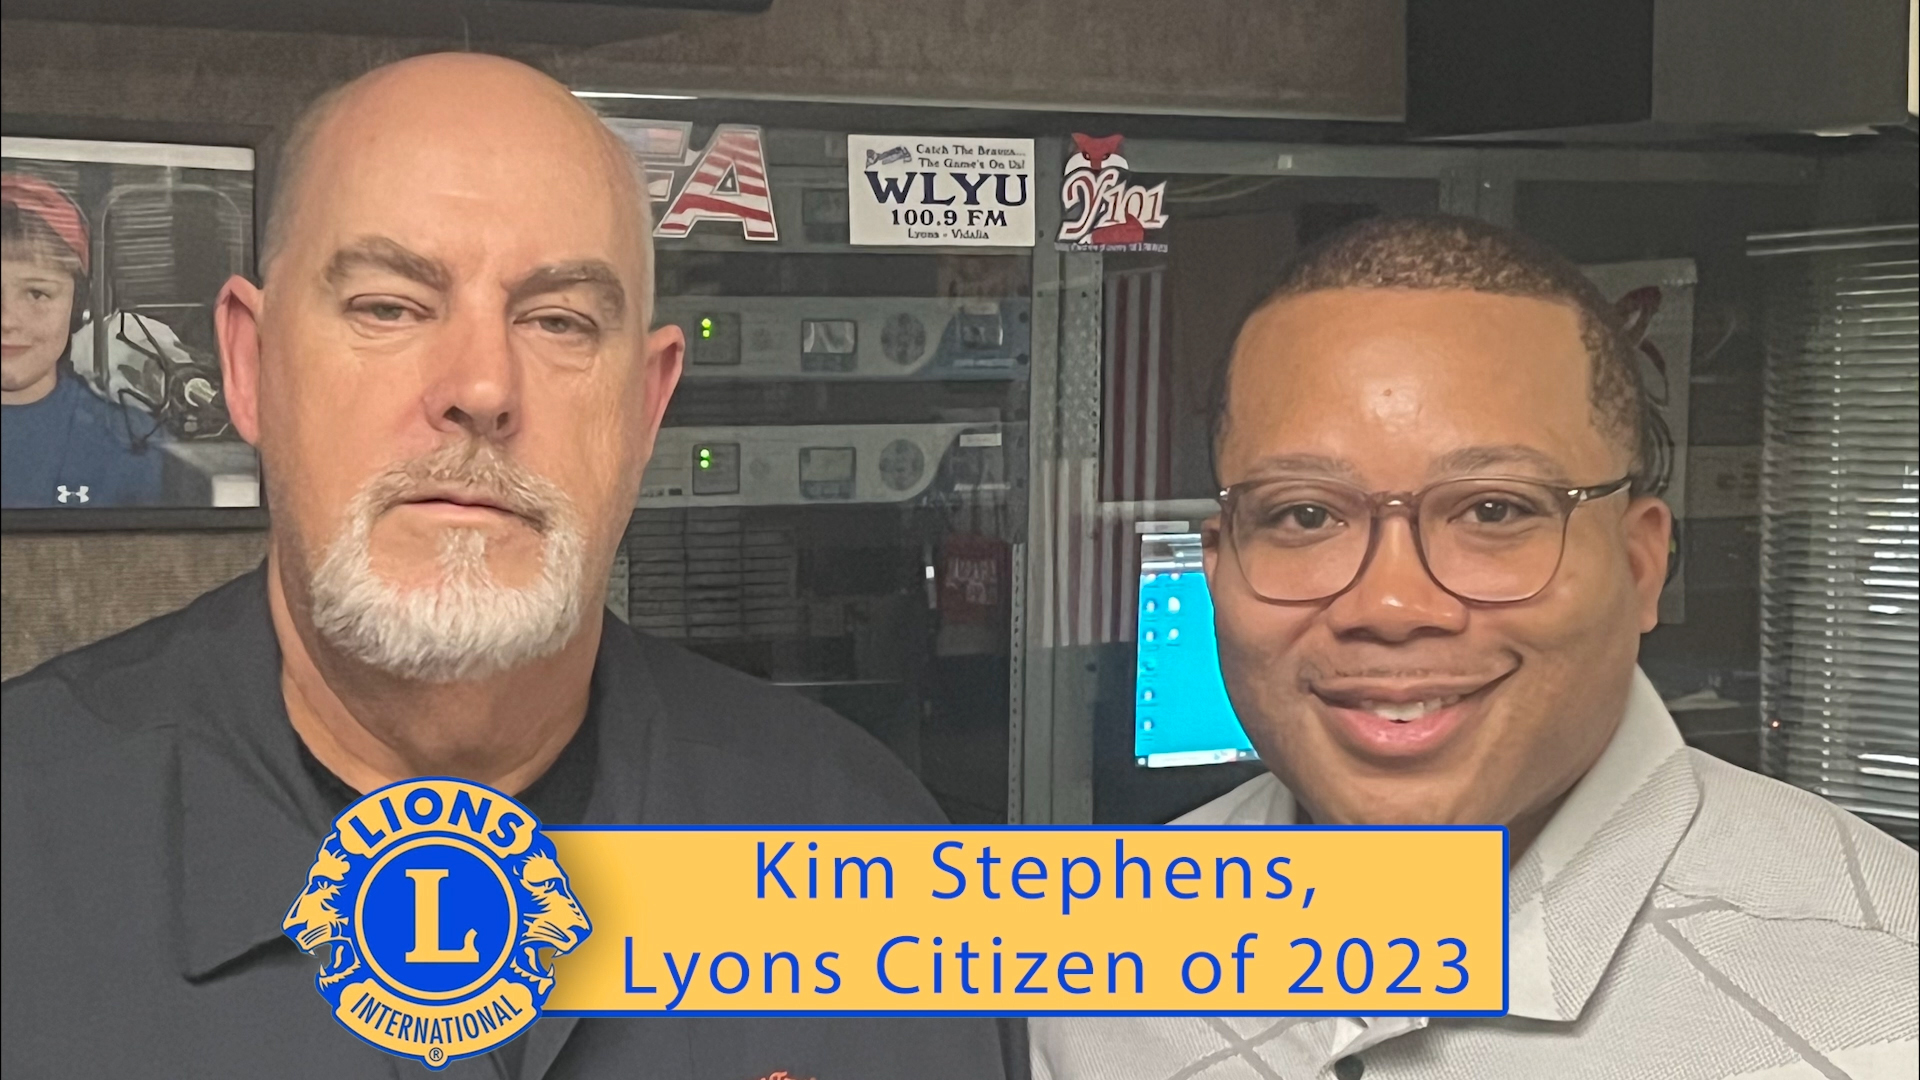 Kim Stephens, Lyons Citizen of 2023